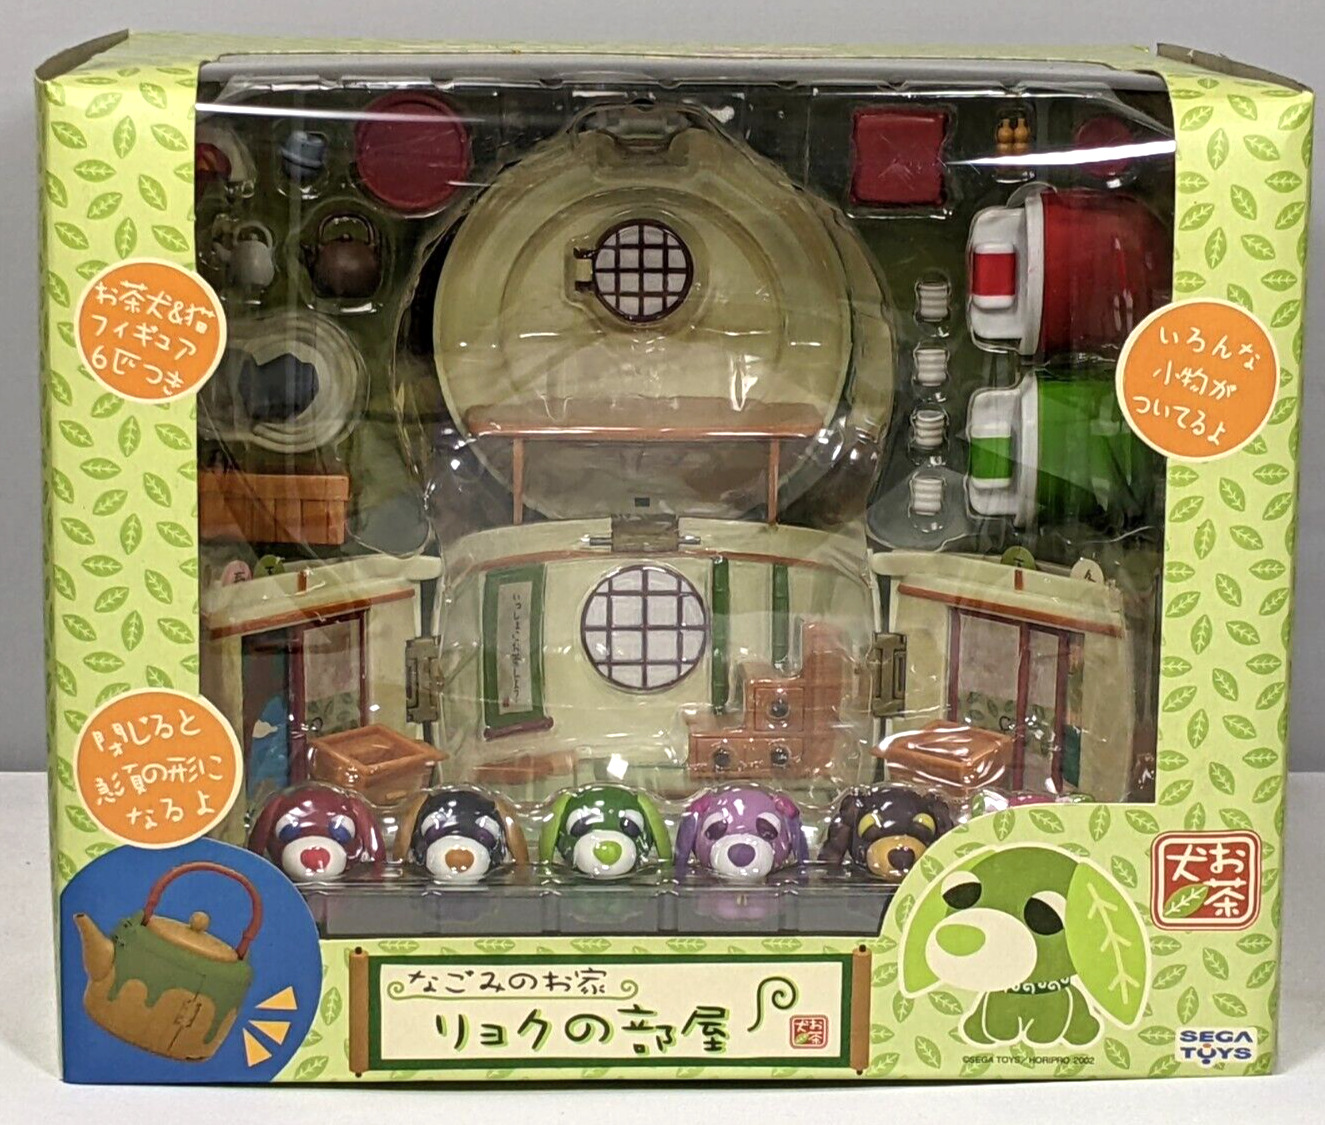 Ocha-Ken Teapot House Miniature Toy Japanese-style Room Green Set From Japan